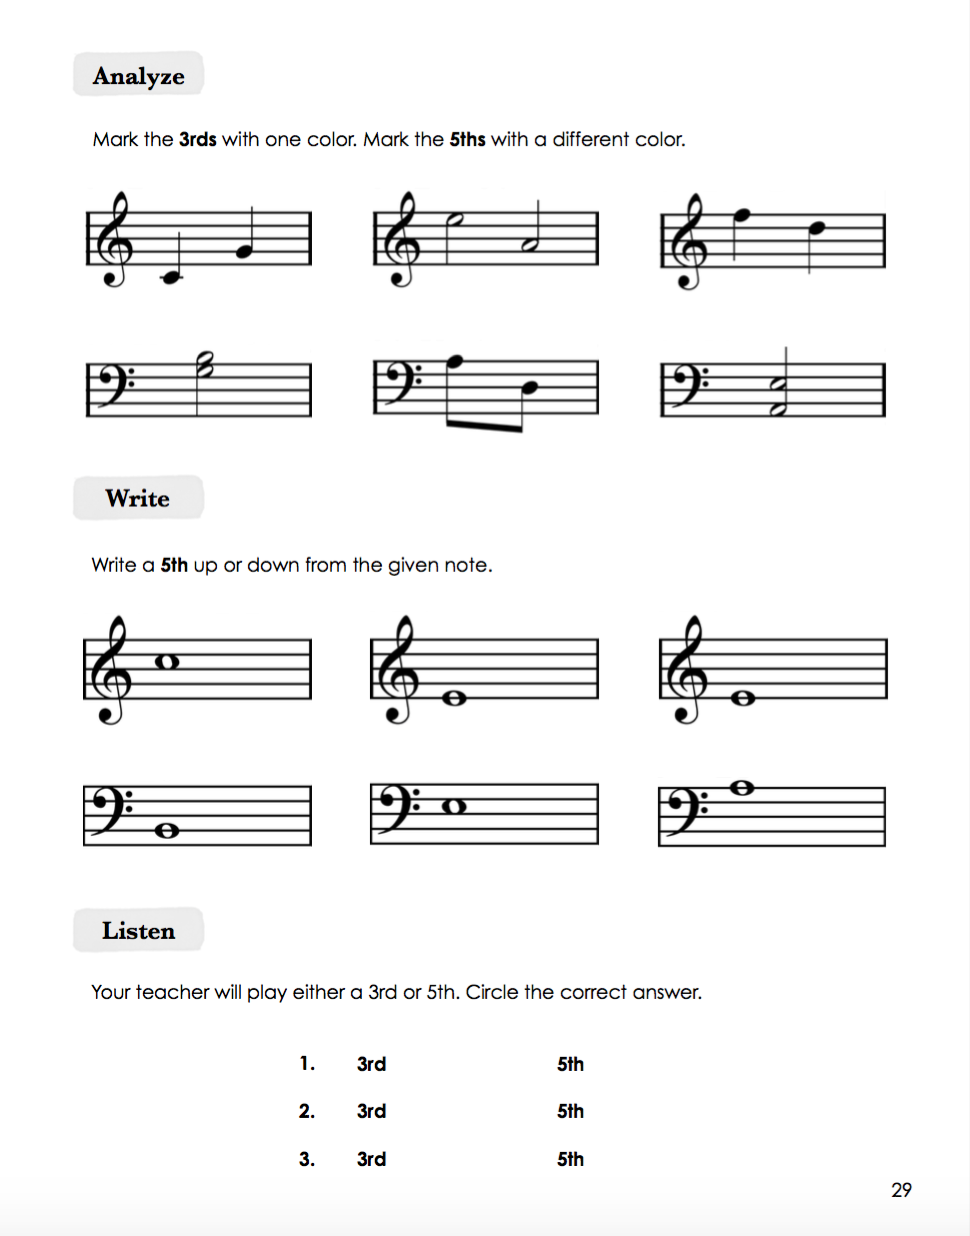 PRE-VENDA Trio de Livros de Teoria Piano Safari Volumes 1, 2 e 3 reunidos Piano Safari Method Theory | THEORY BOOK LEVEL 1 +2 +3 | PIANO SAFARI LIVRO DE TEORIA MUSICAL NA LOJA MINEIRA DO